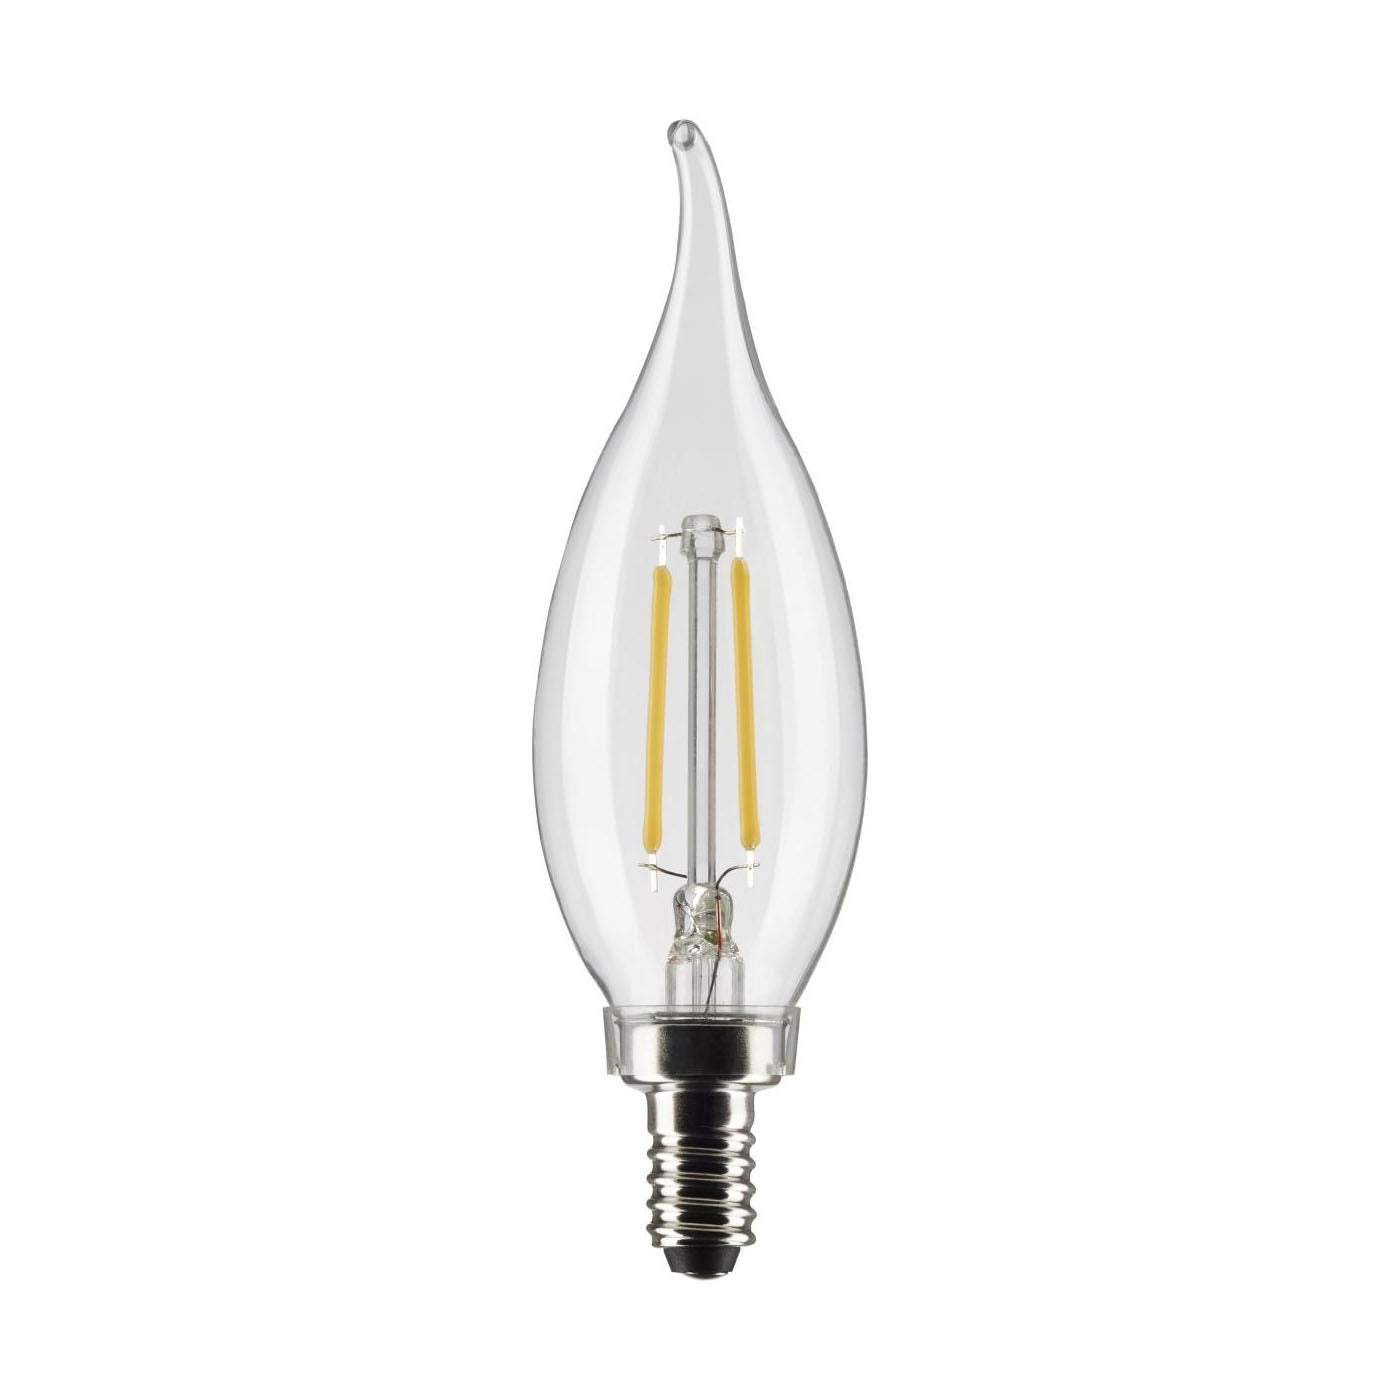 Flame Tip - Candelabra LED Light Bulb